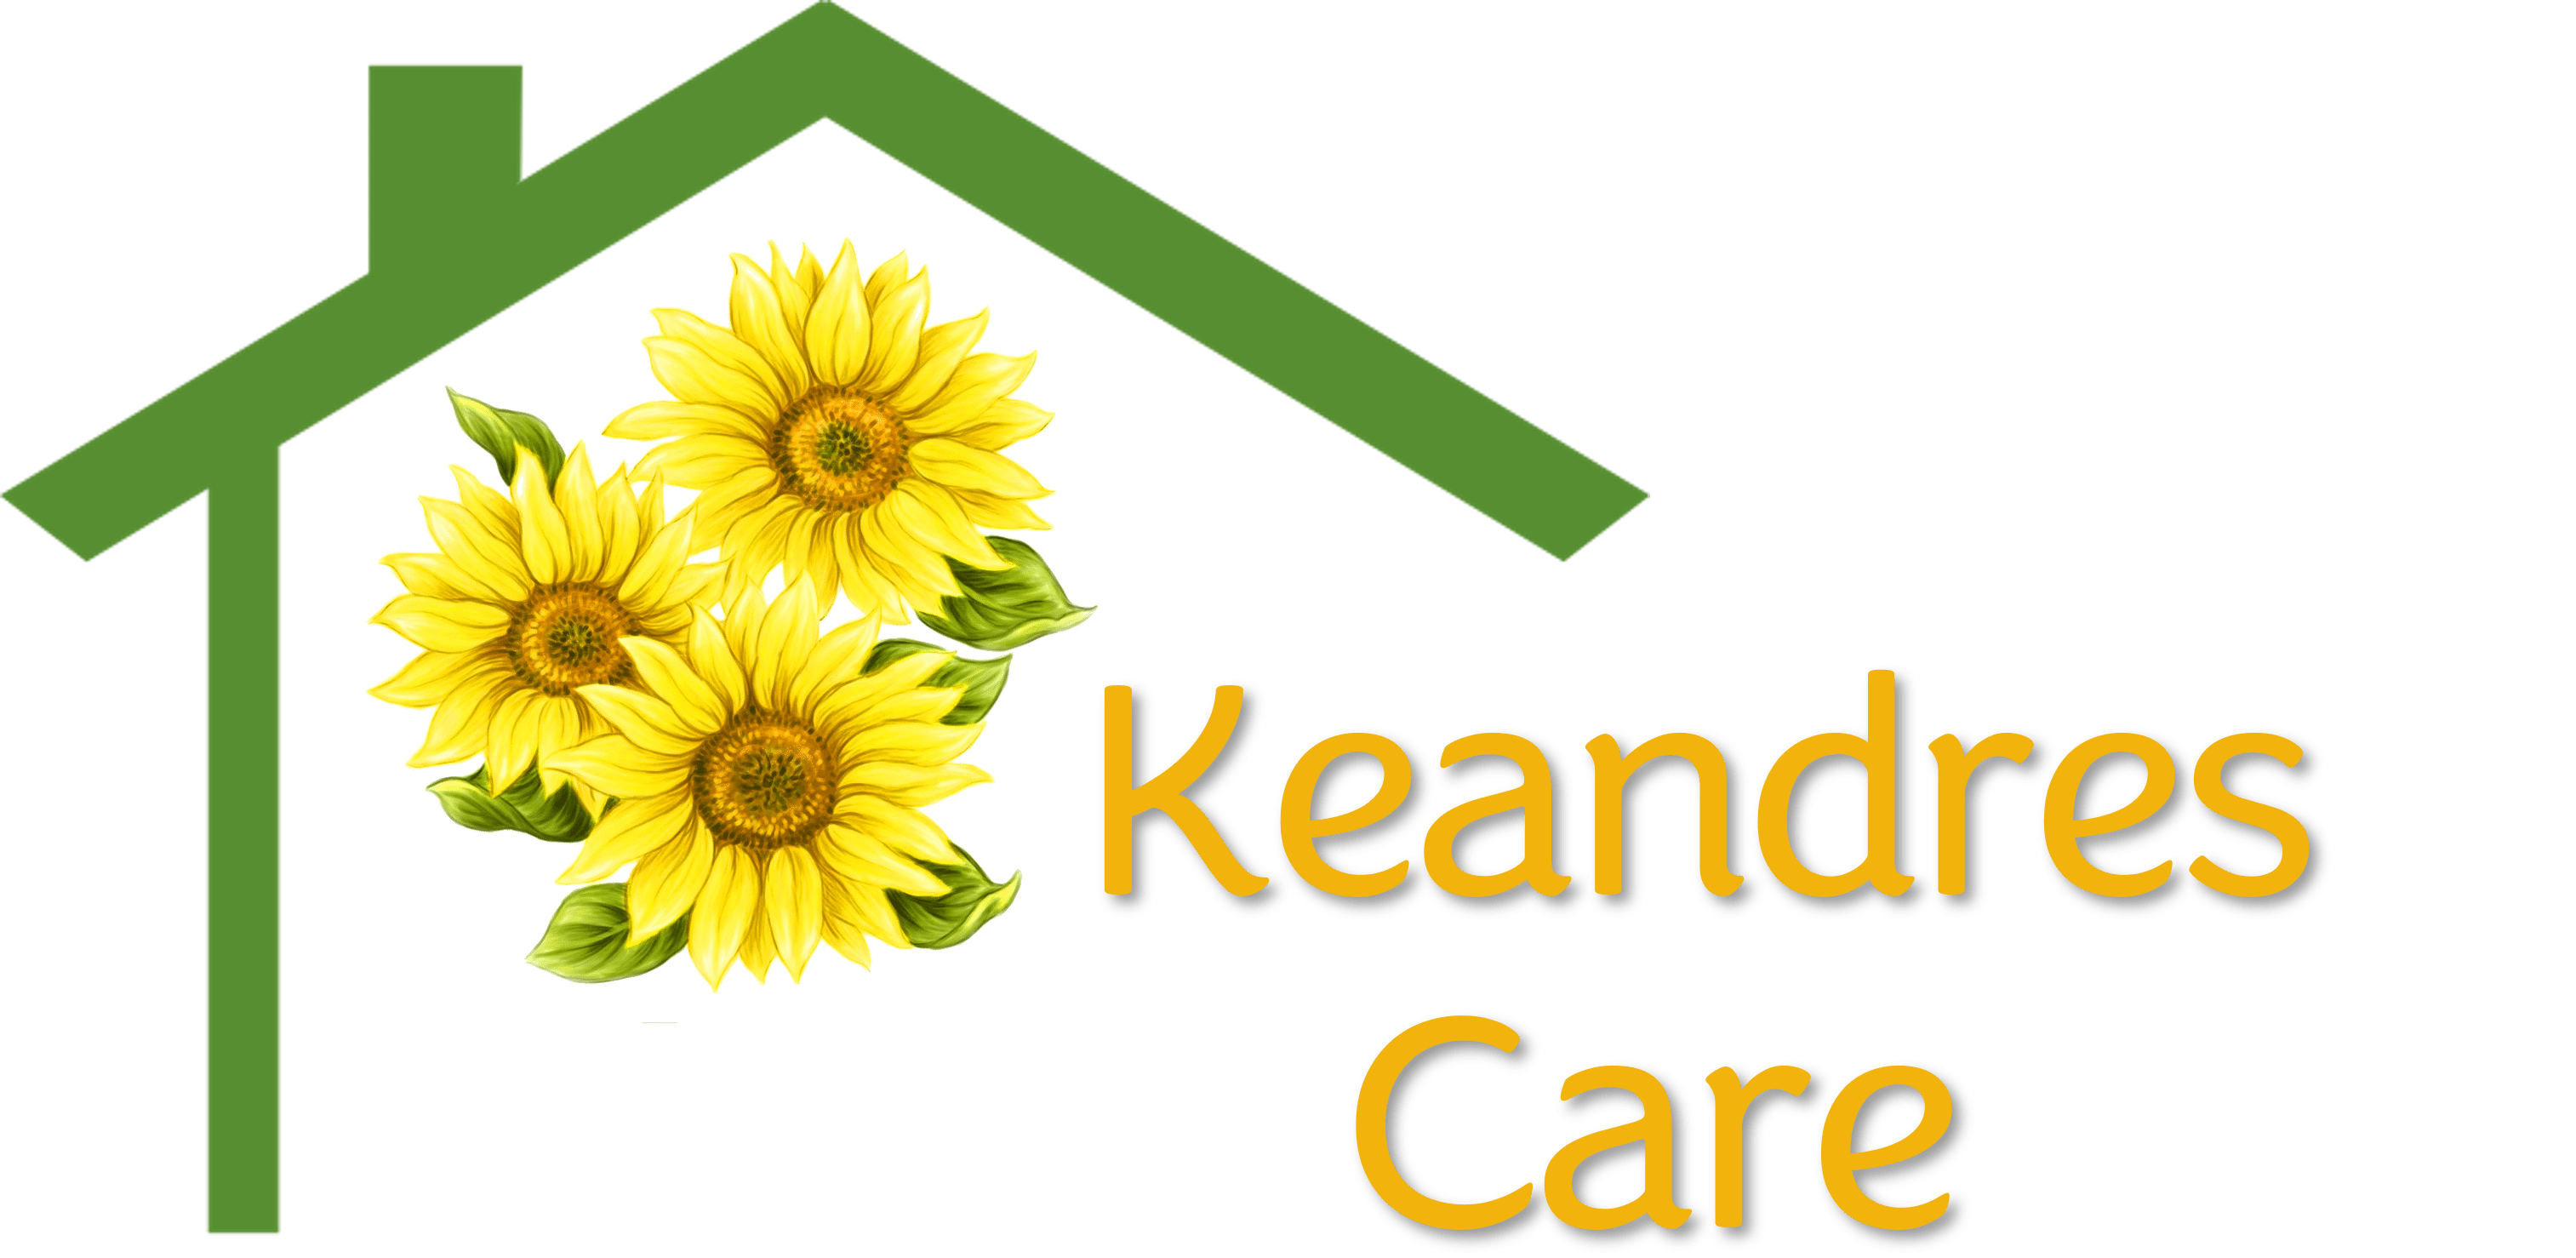 Keandres Care